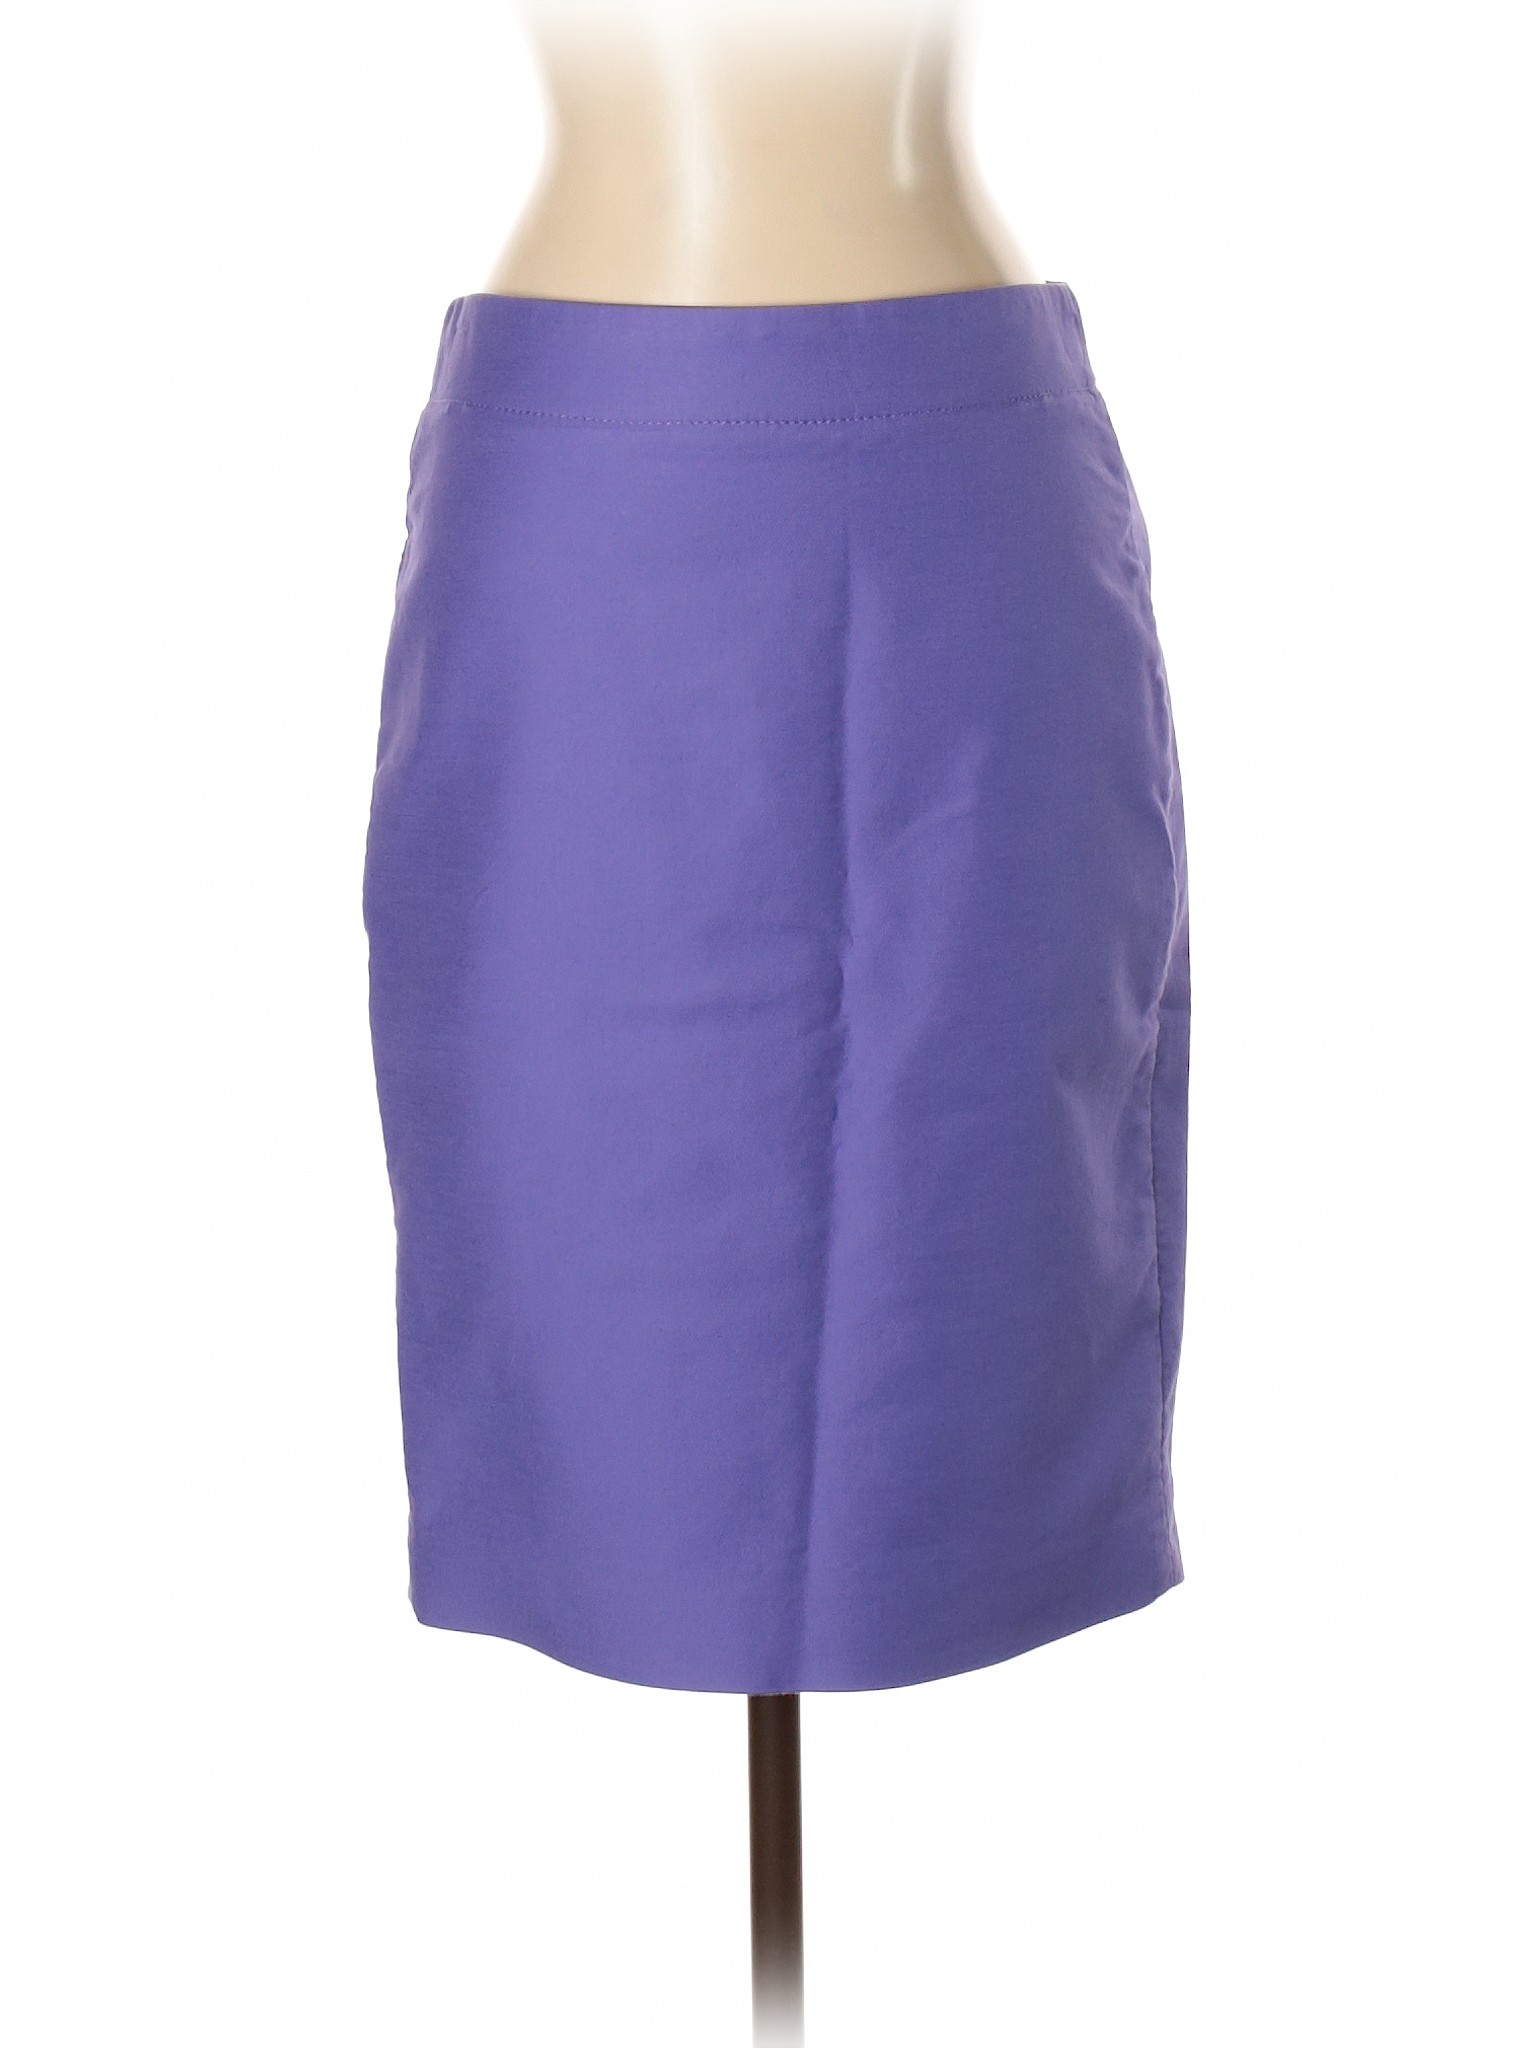 J.Crew Women Purple Casual Skirt 2 | eBay